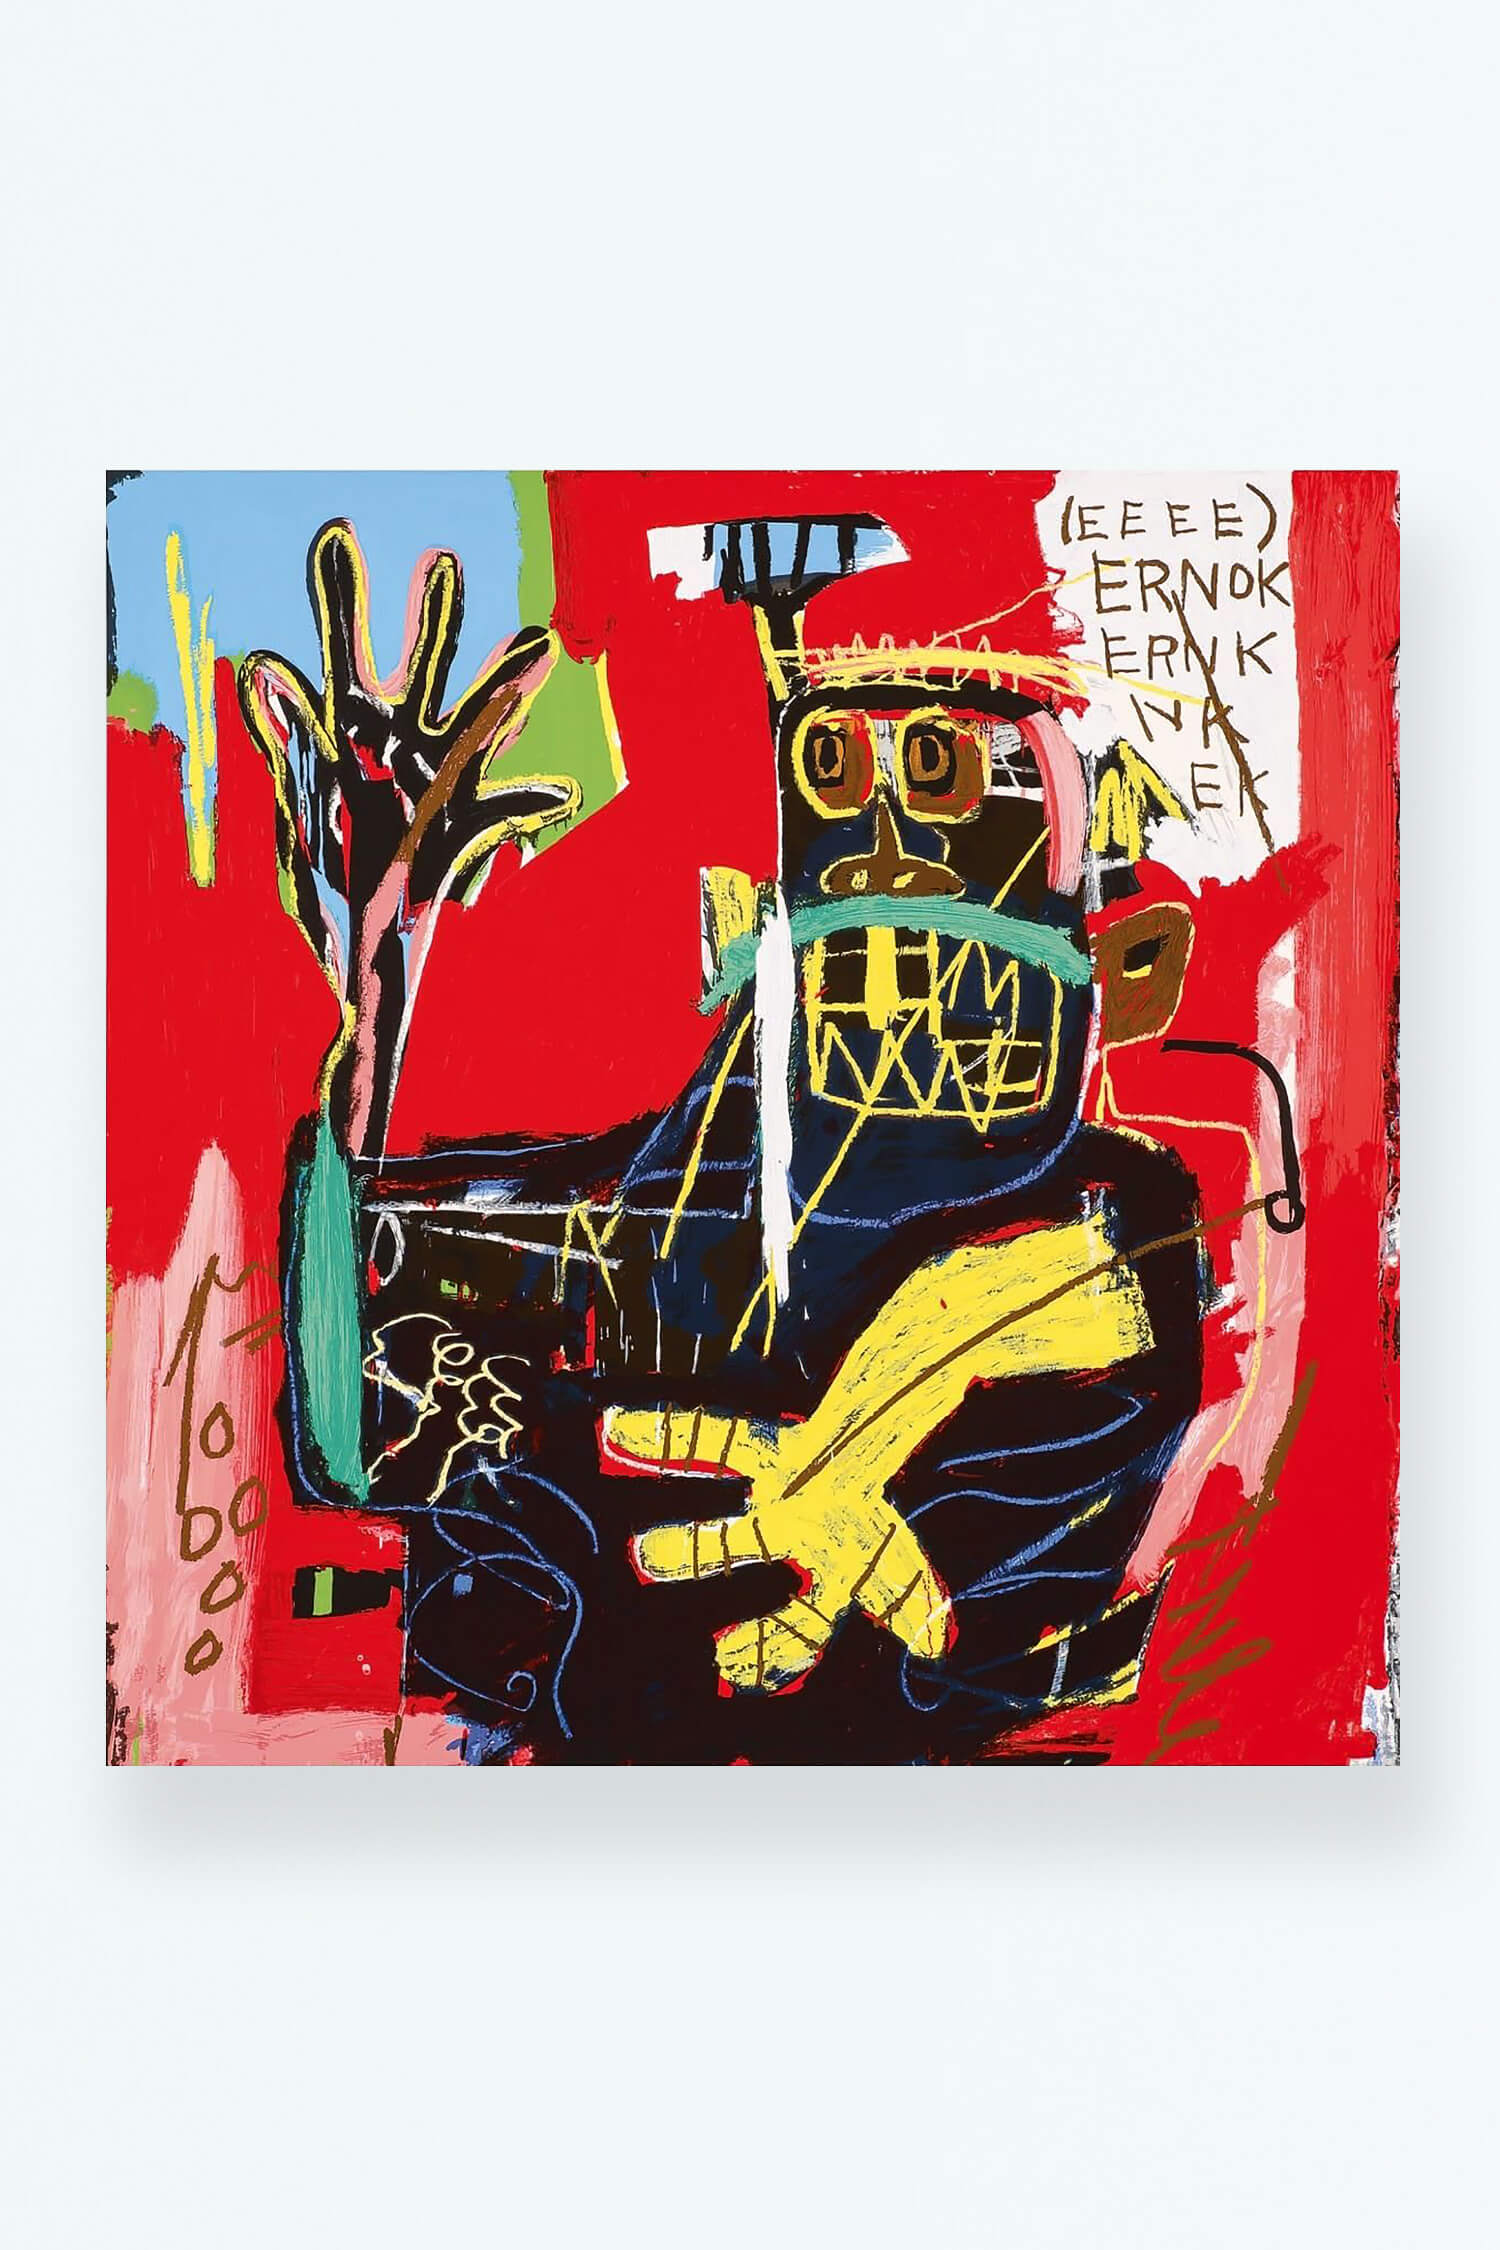 Jean-Michel Basquiat | Ernok